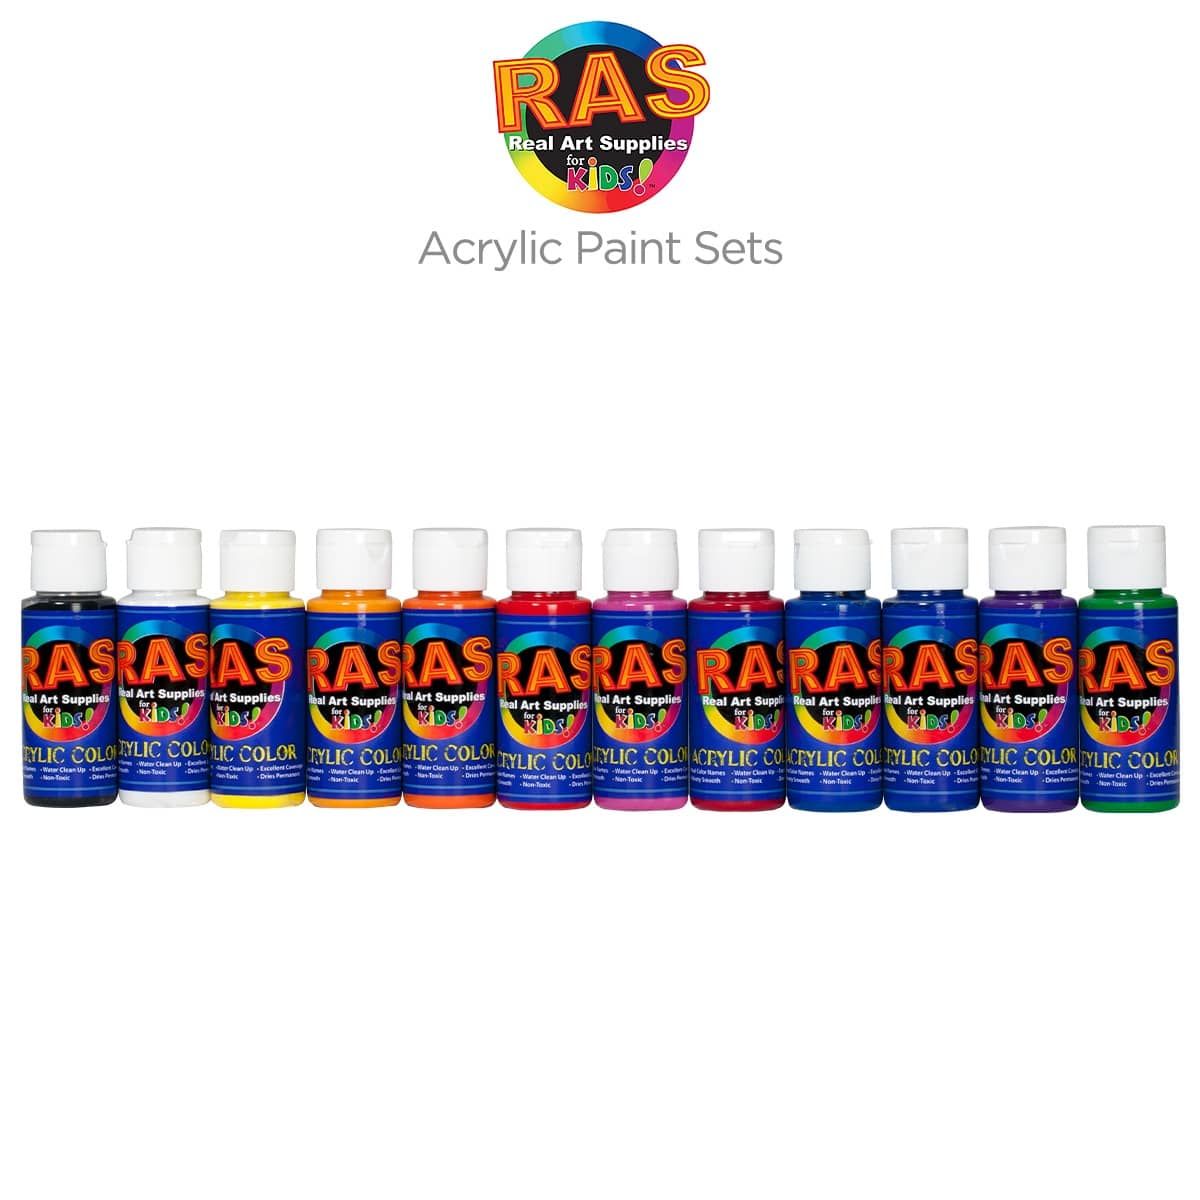 RAS Acrylic Paint Sets